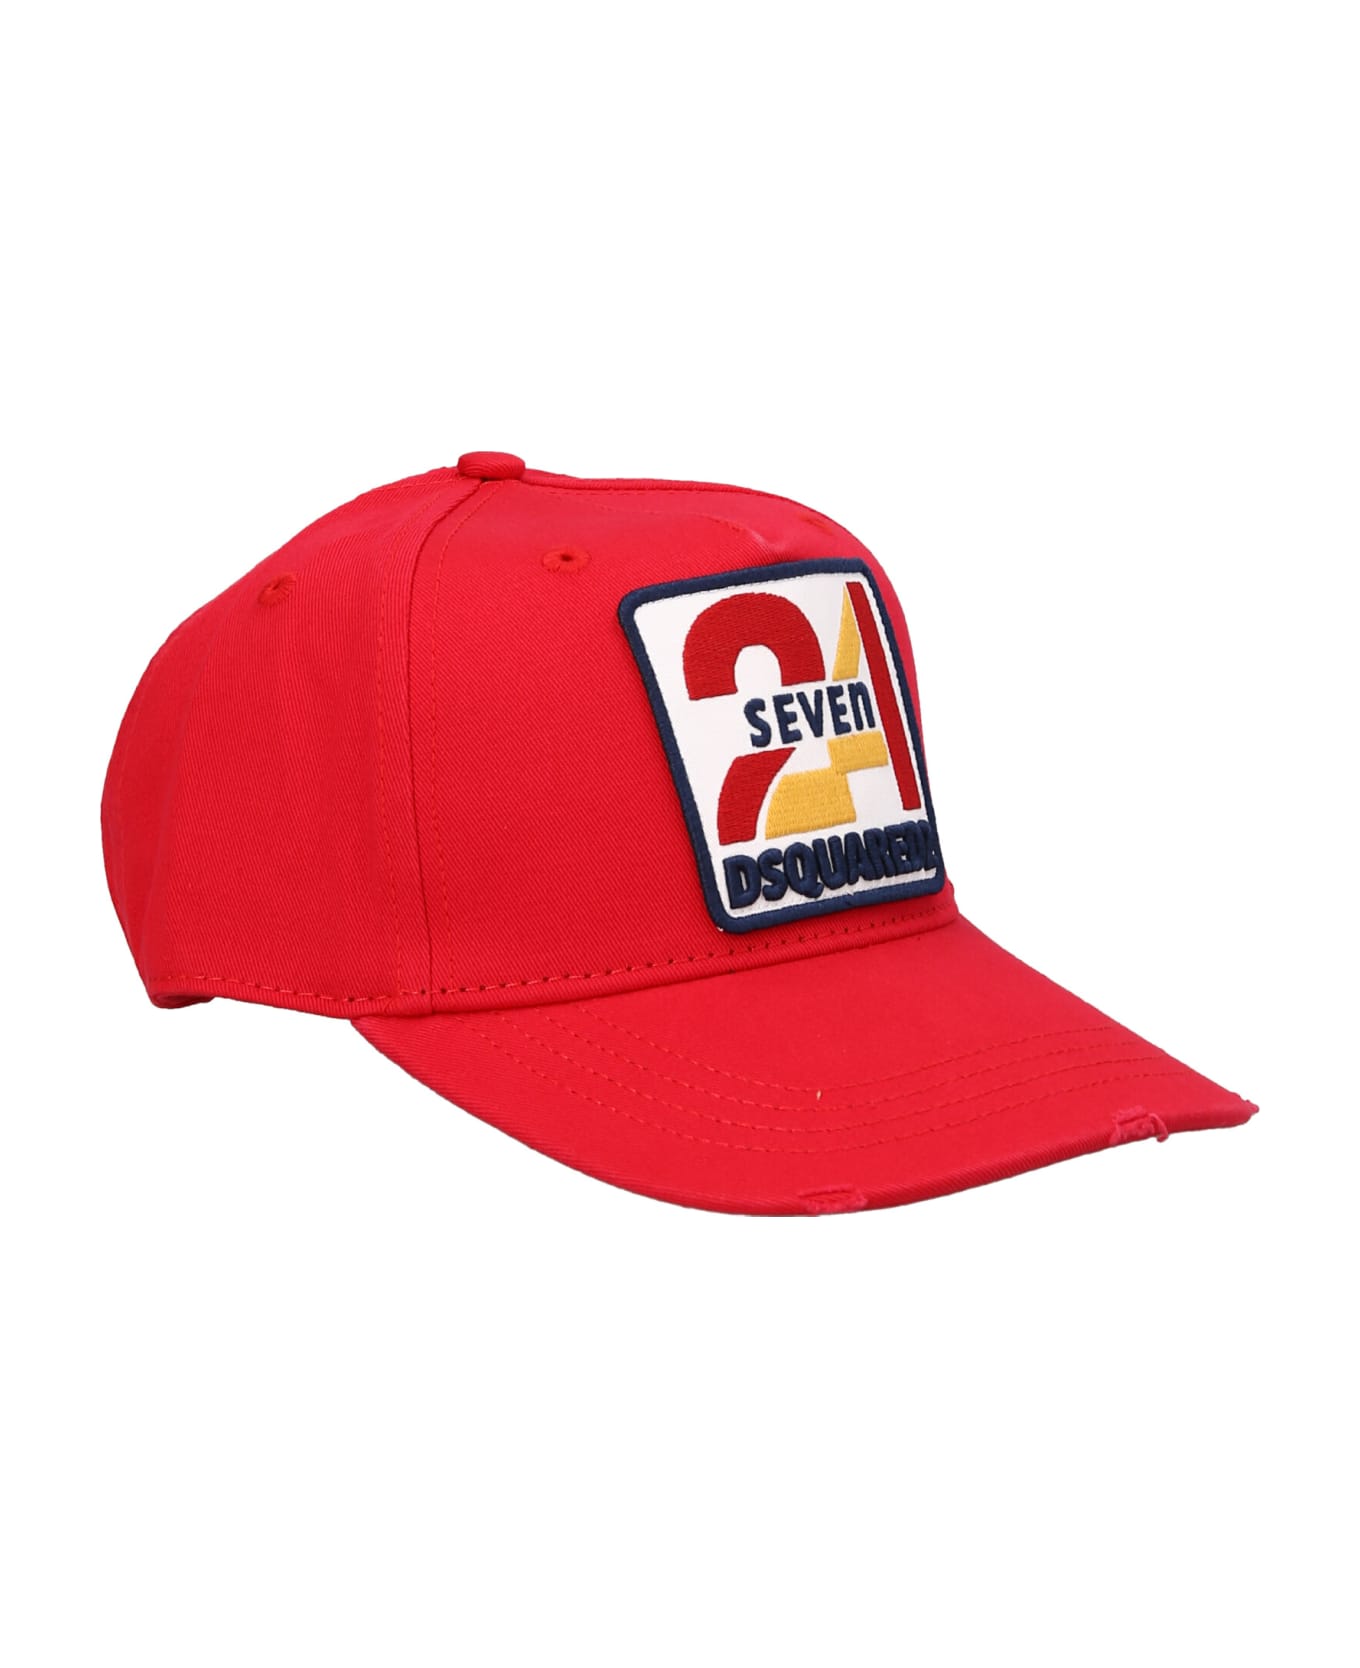 Dsquared2 Baseball Cap - Red